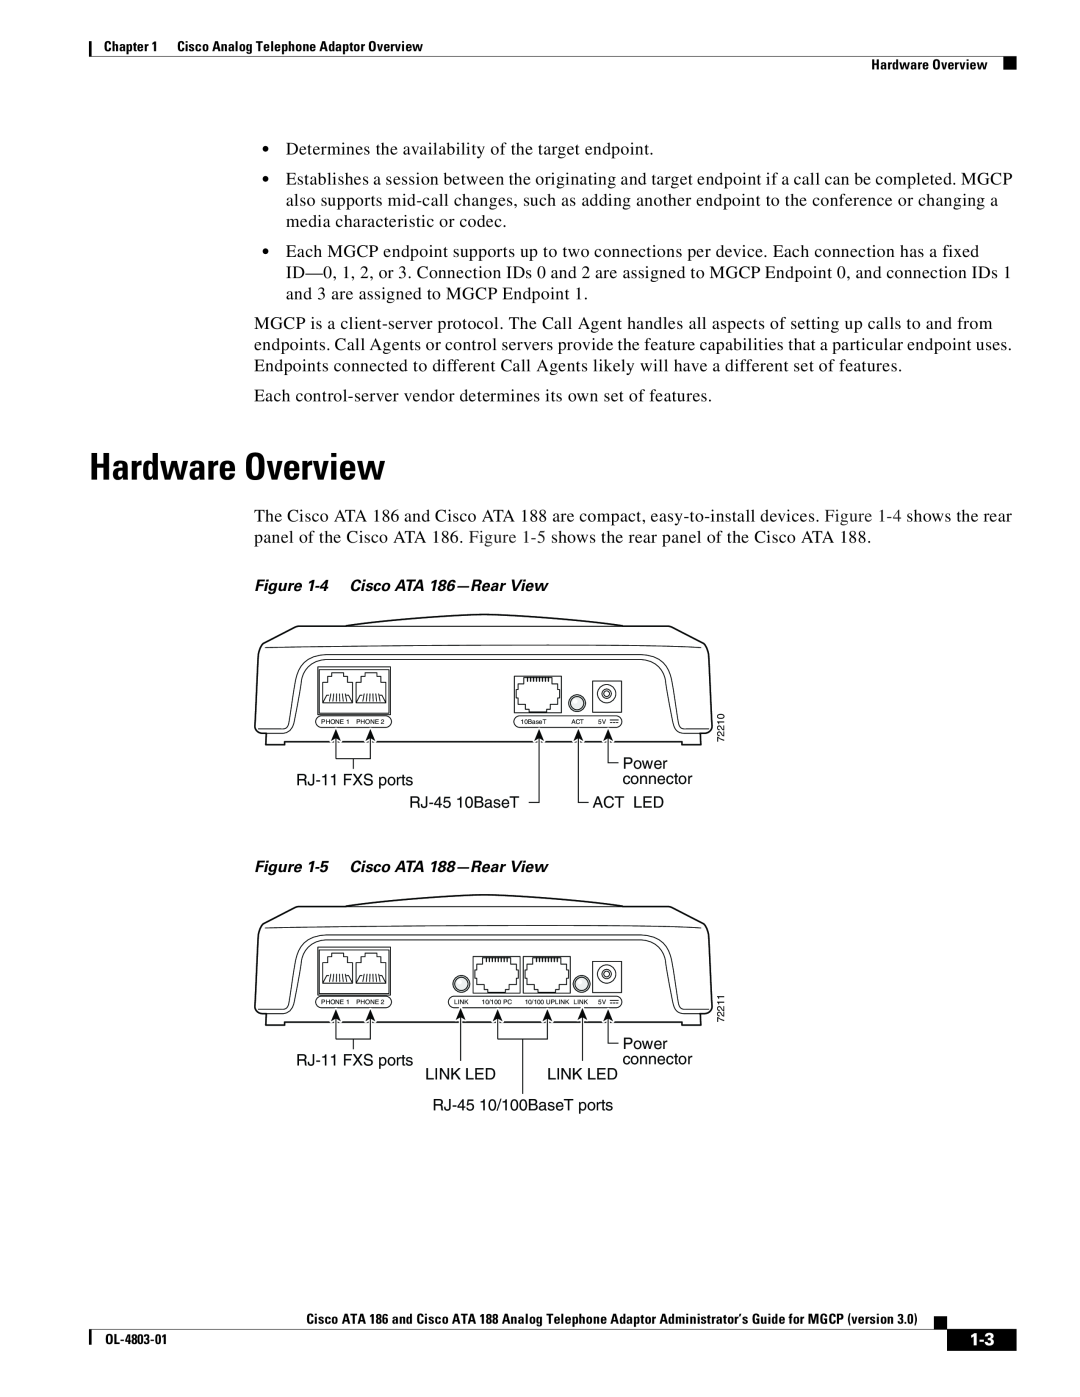 Cisco Systems ATA 188, ATA 186 manual Hardware Overview 